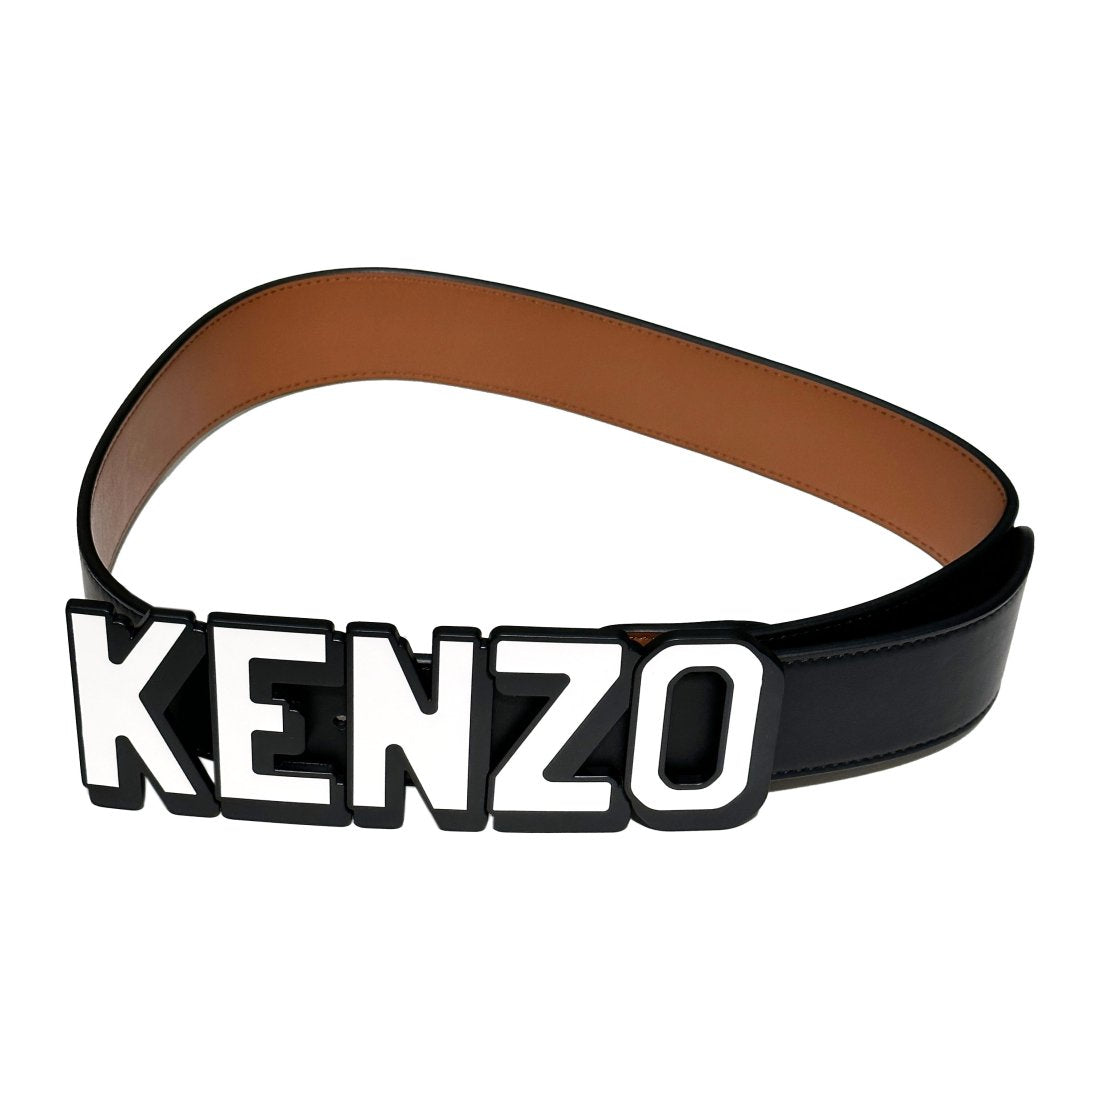 KENZO / BELT